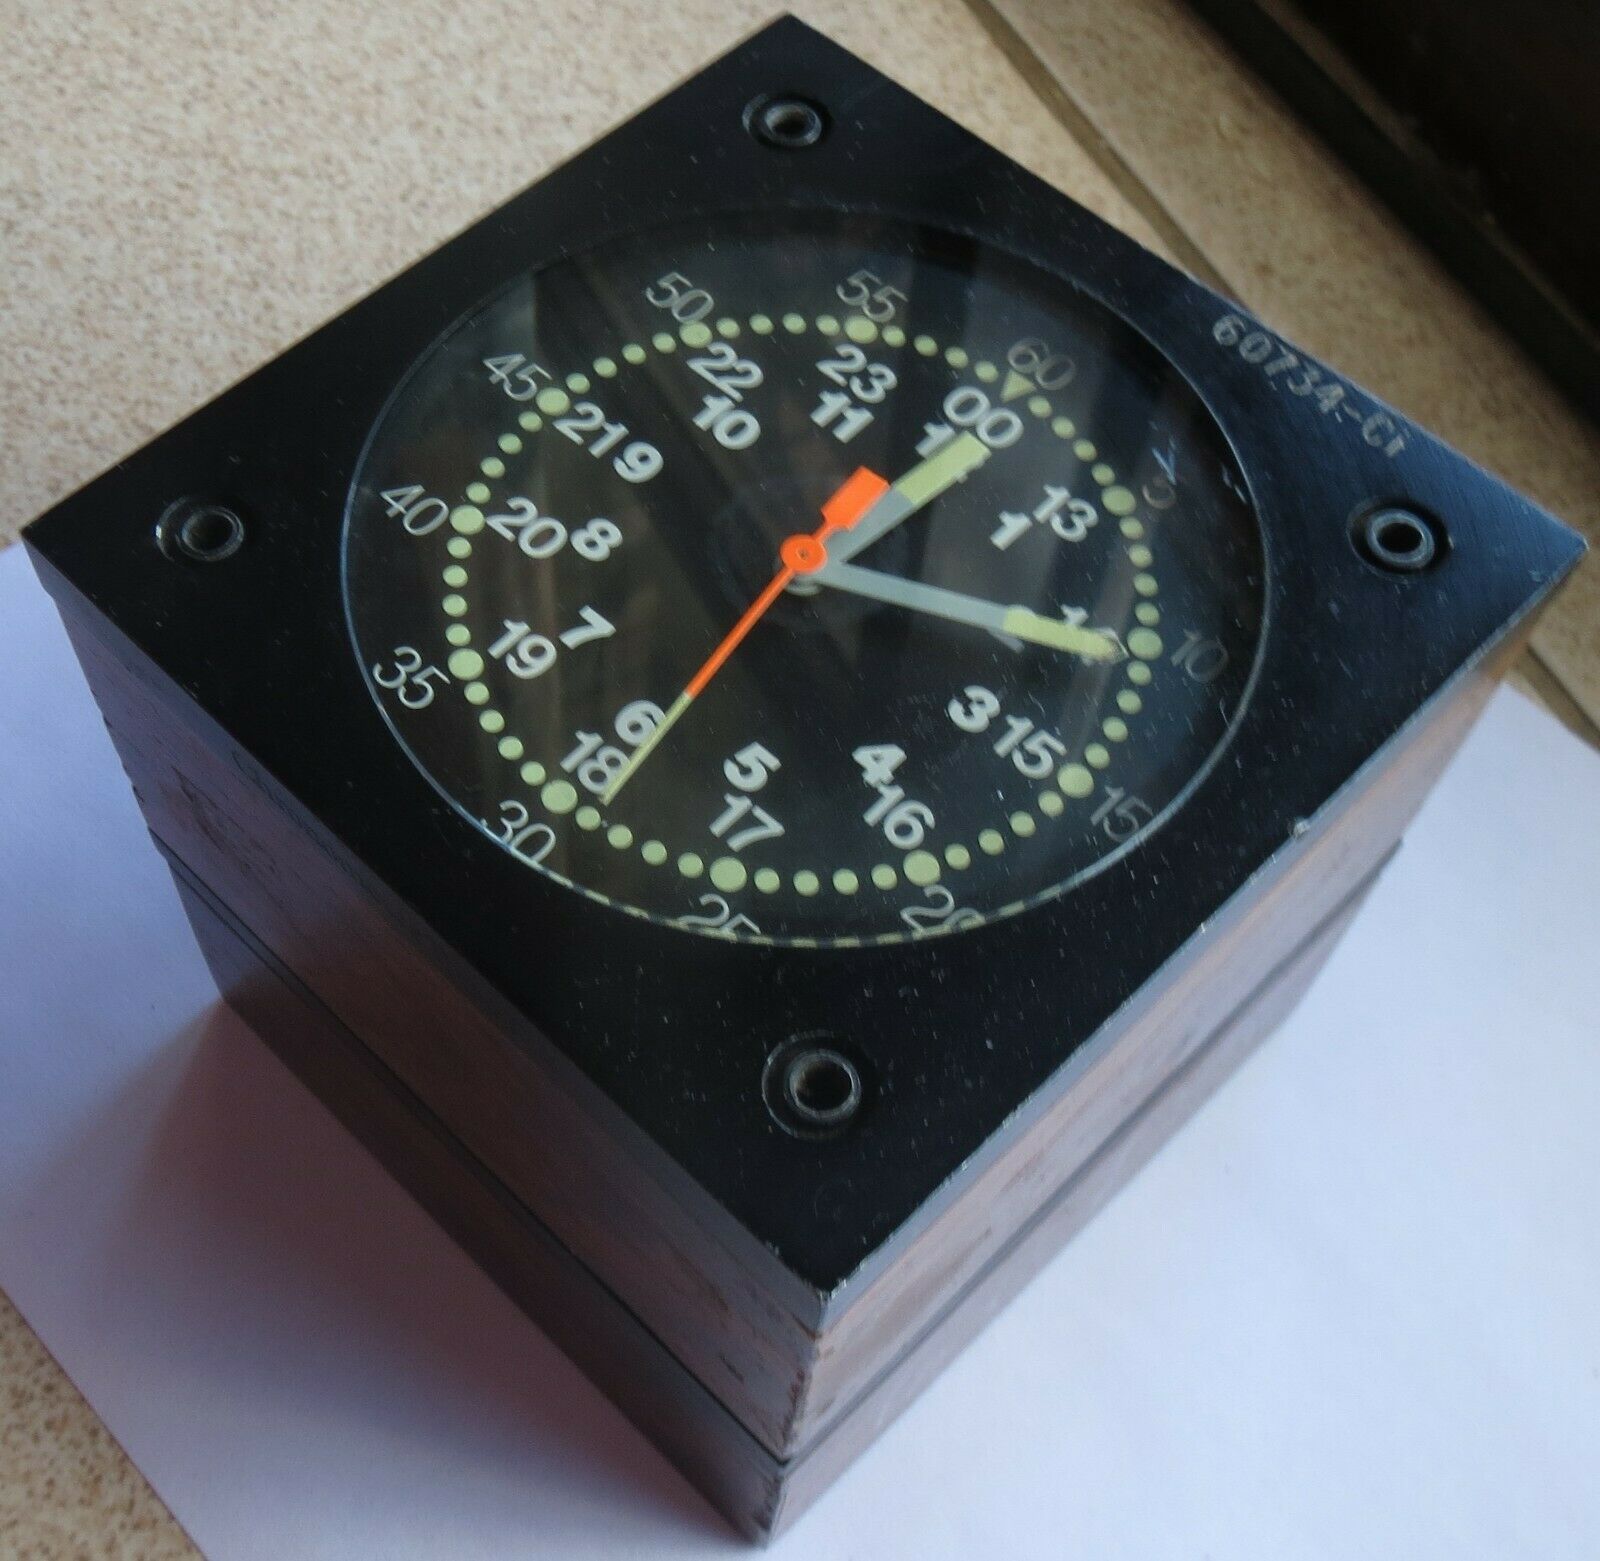 Patek Philippe by Kelvin Hughes marine chronometer quartz in working condition